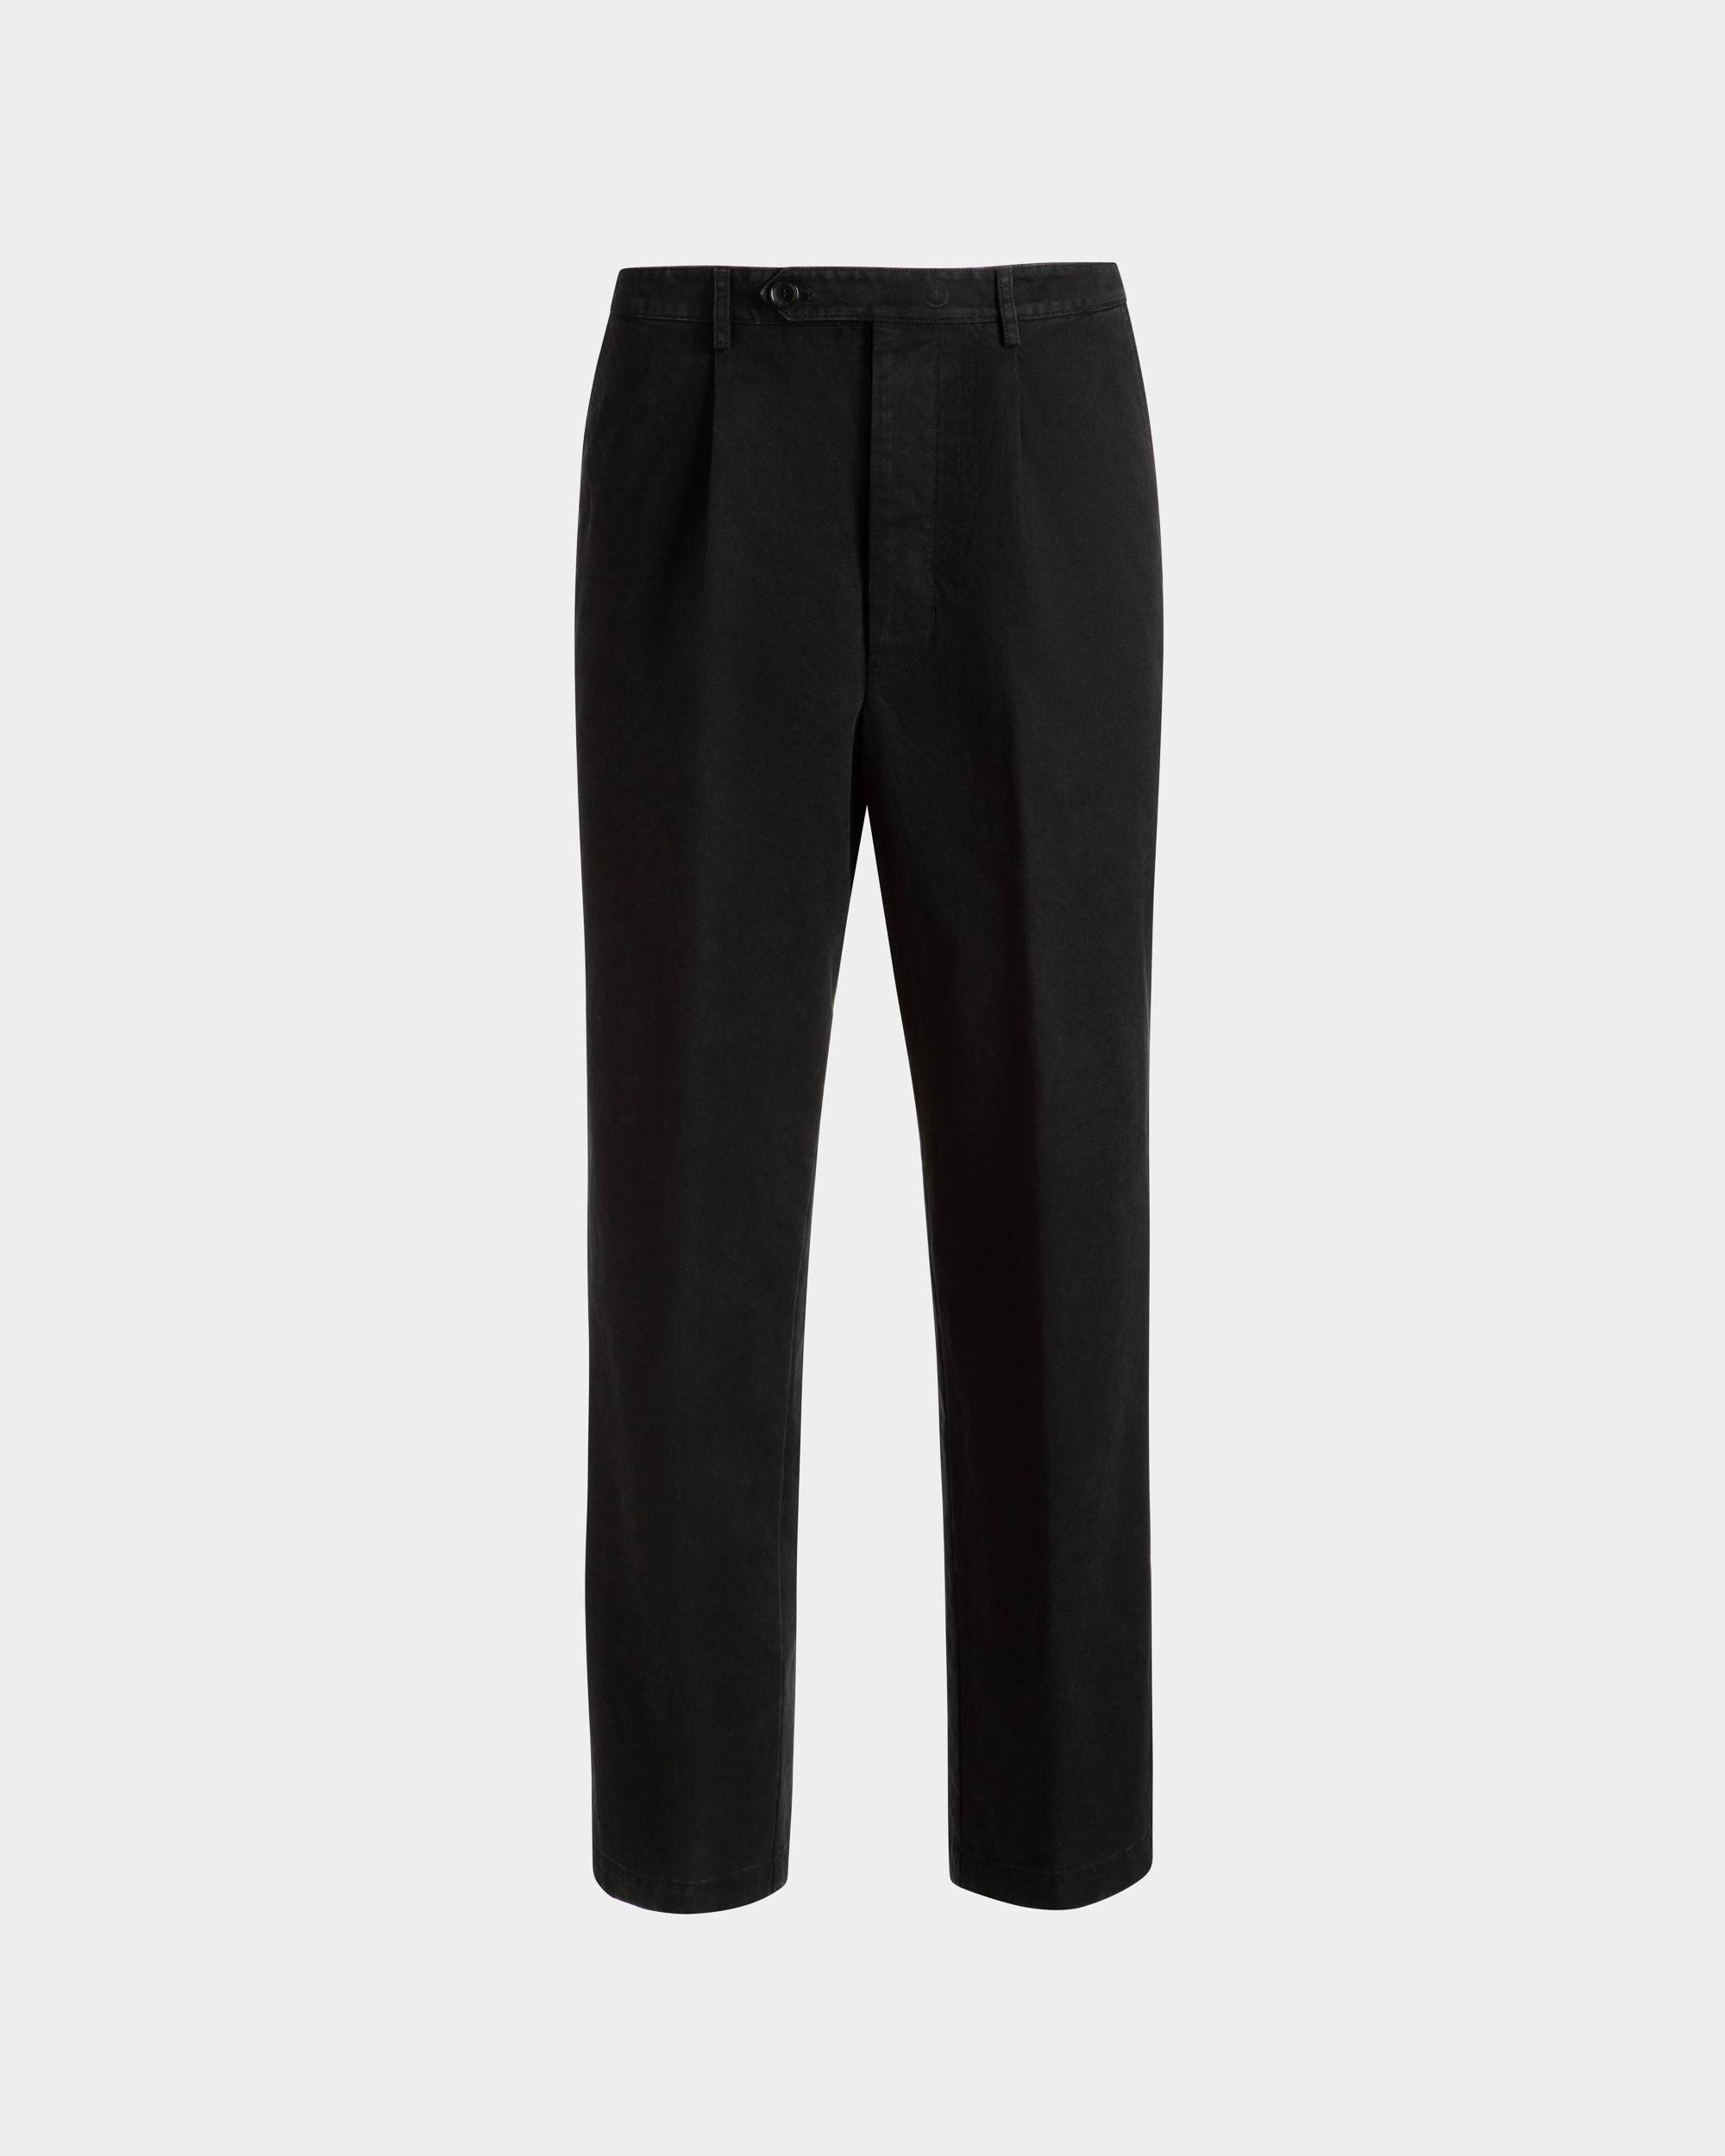 Men's Pants in Black Cotton | Bally | Still Life Front